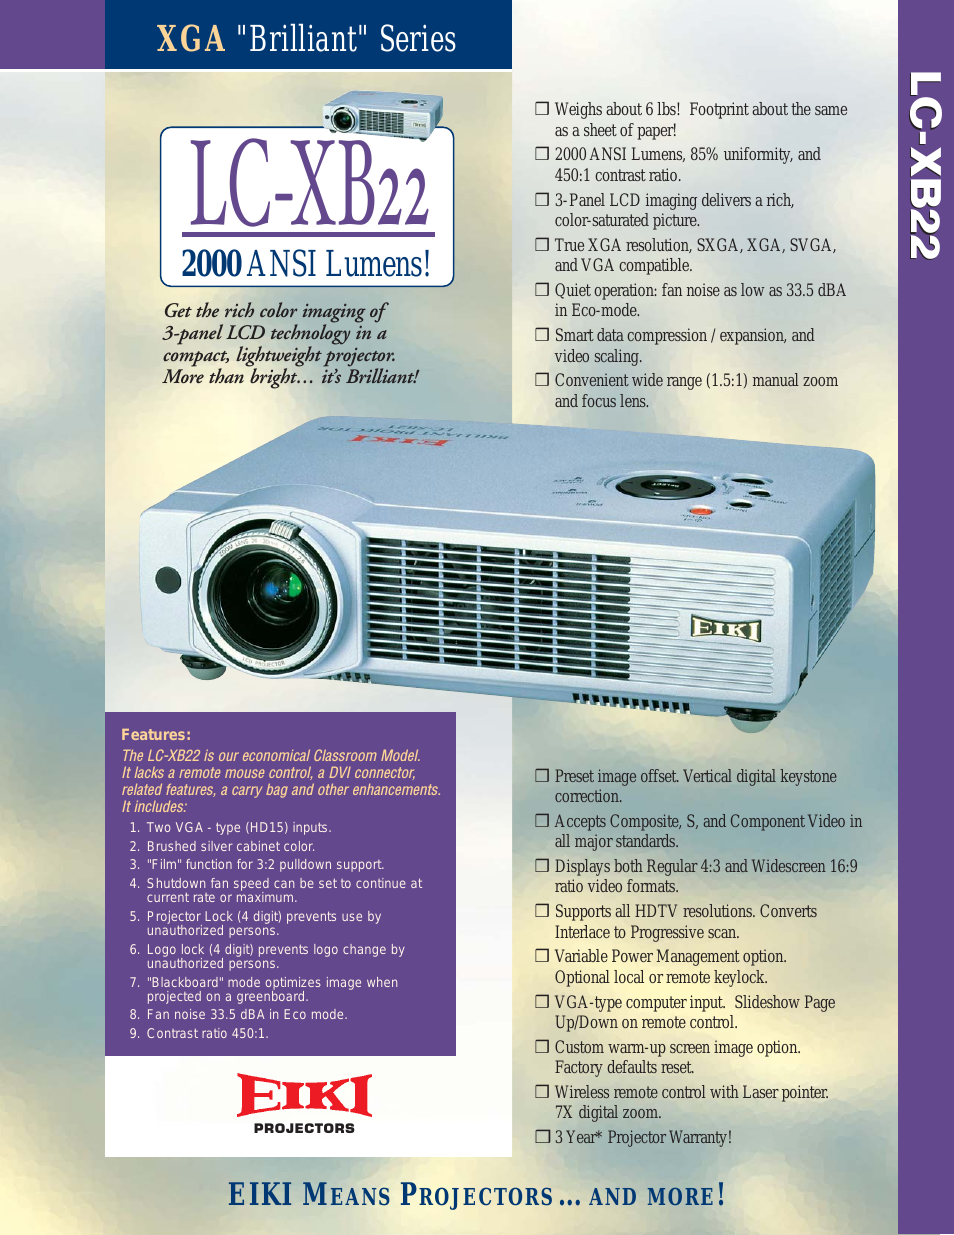 LC-XB22